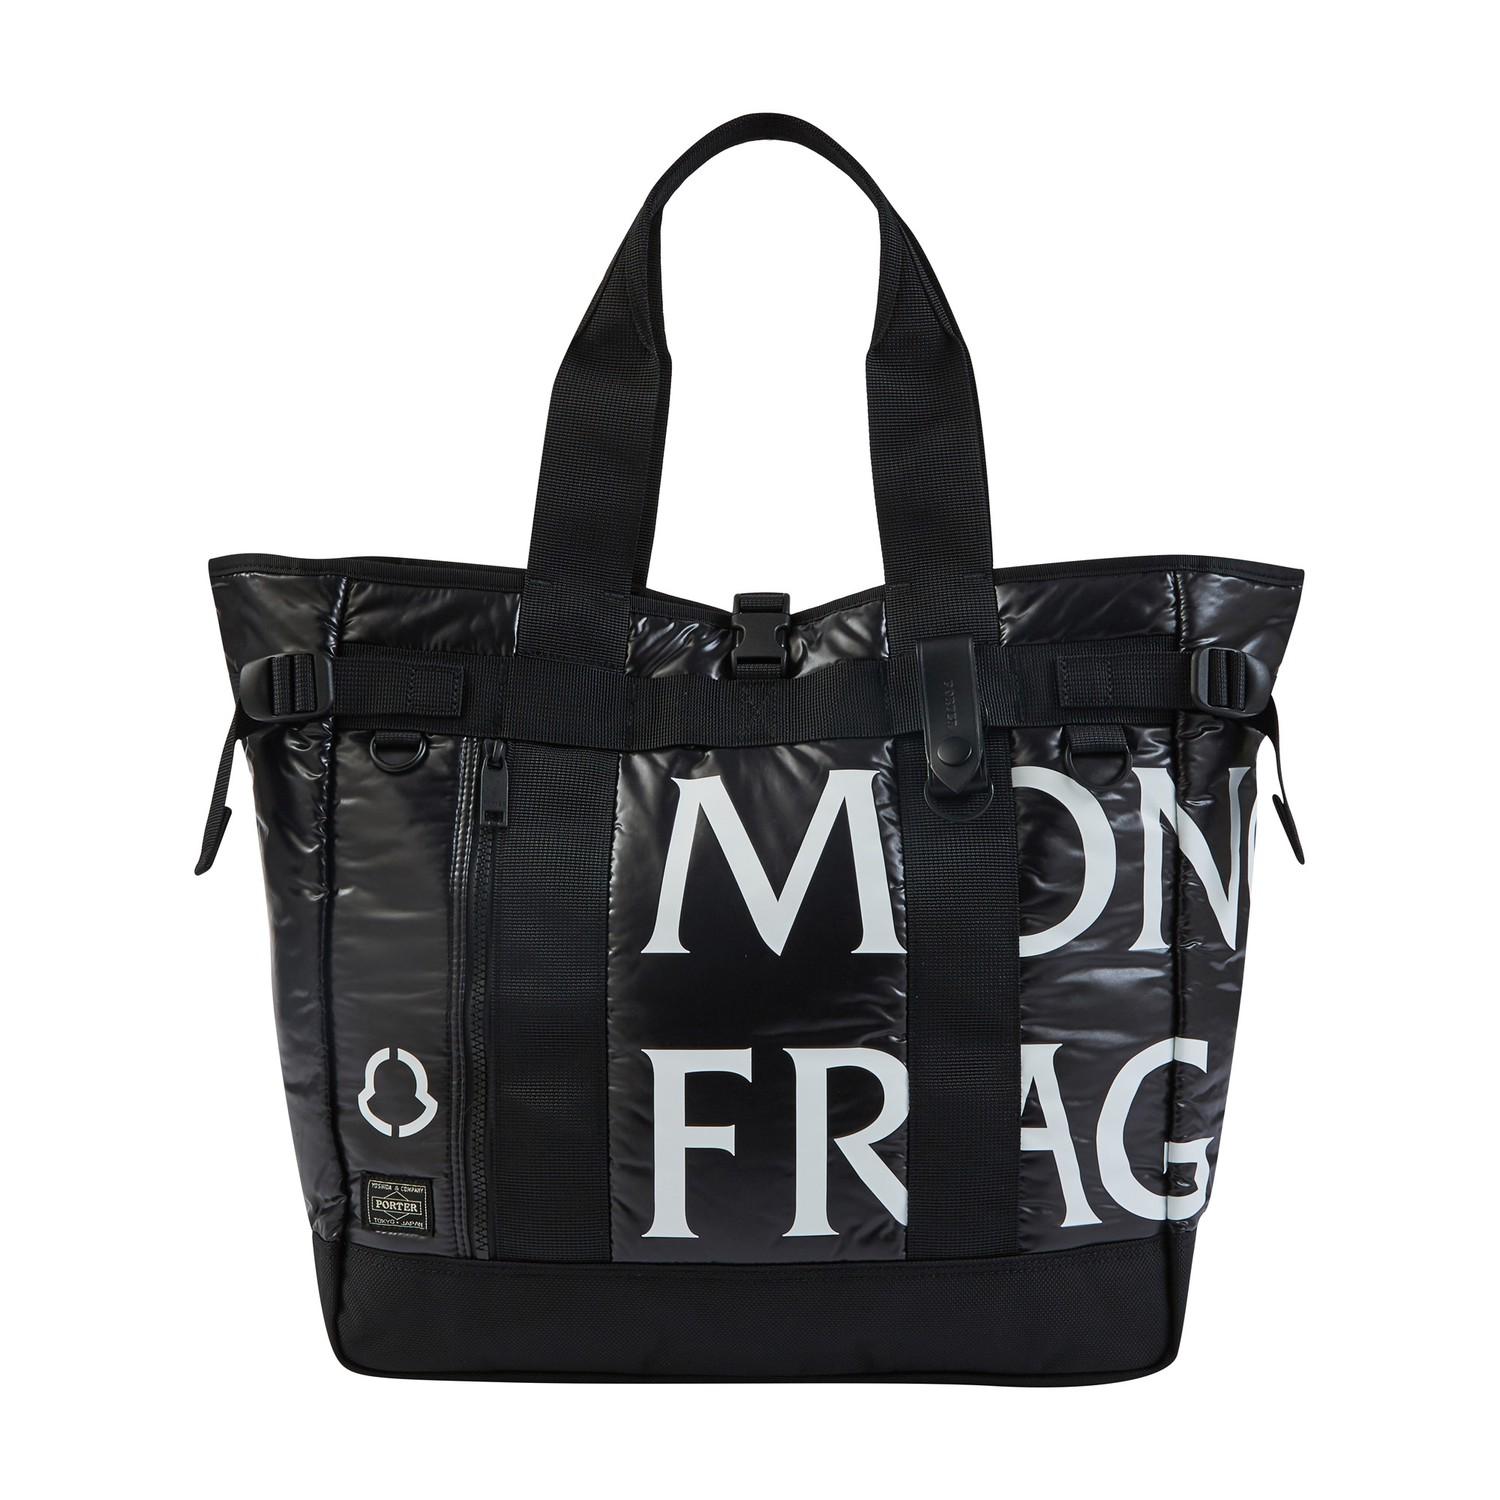 Moncler Genius Fragment - Tote Bag in Black for Men - Lyst